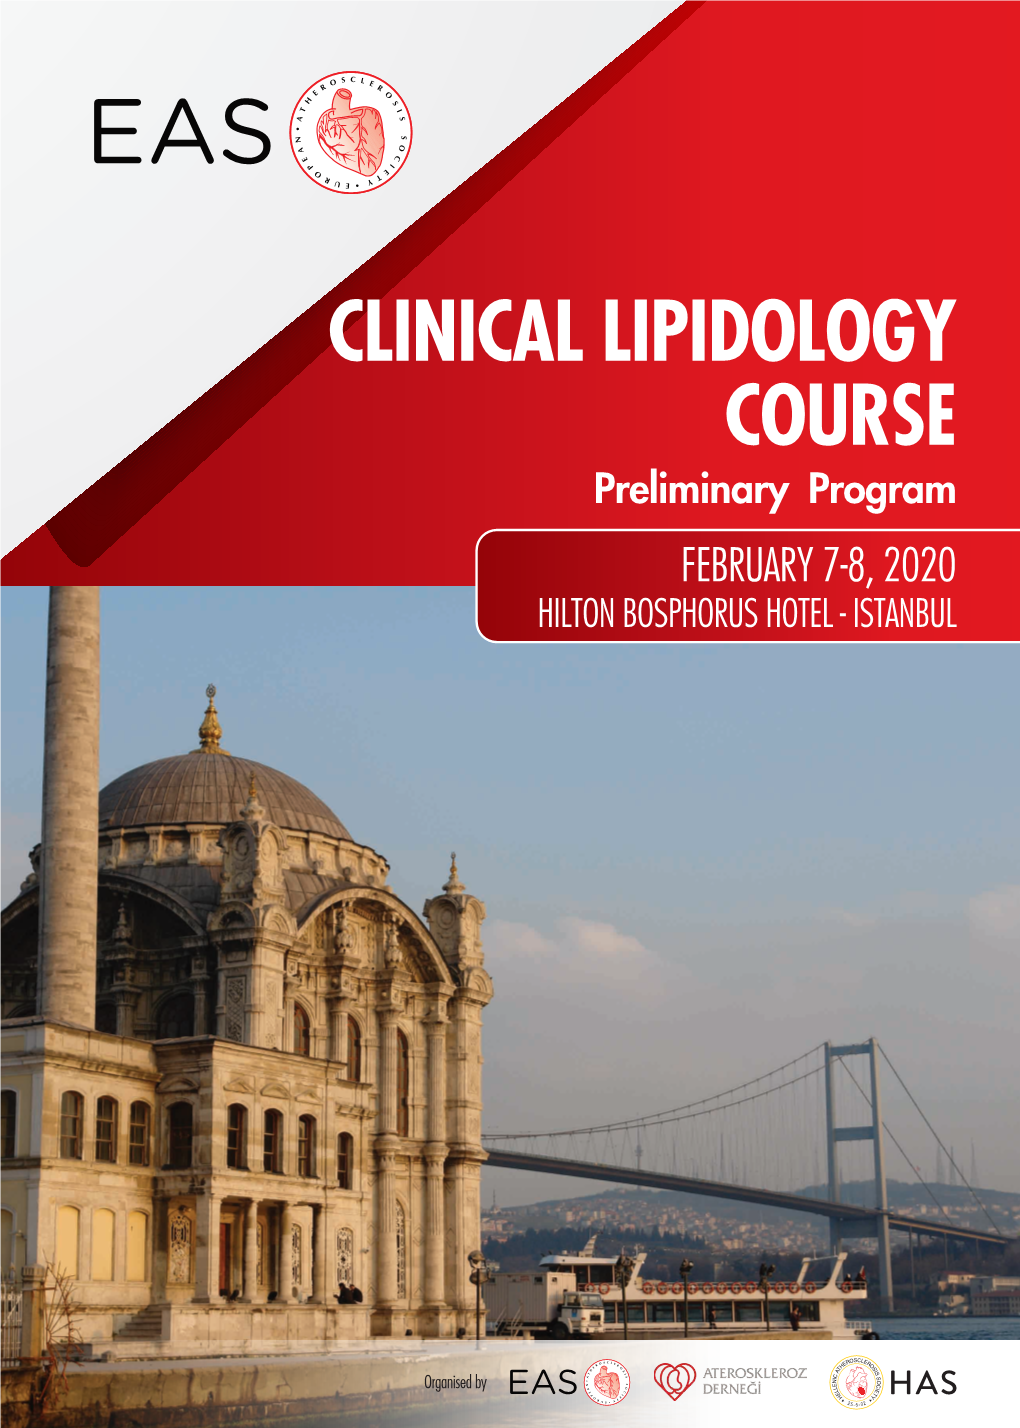 Clinical Lipidology Course Program